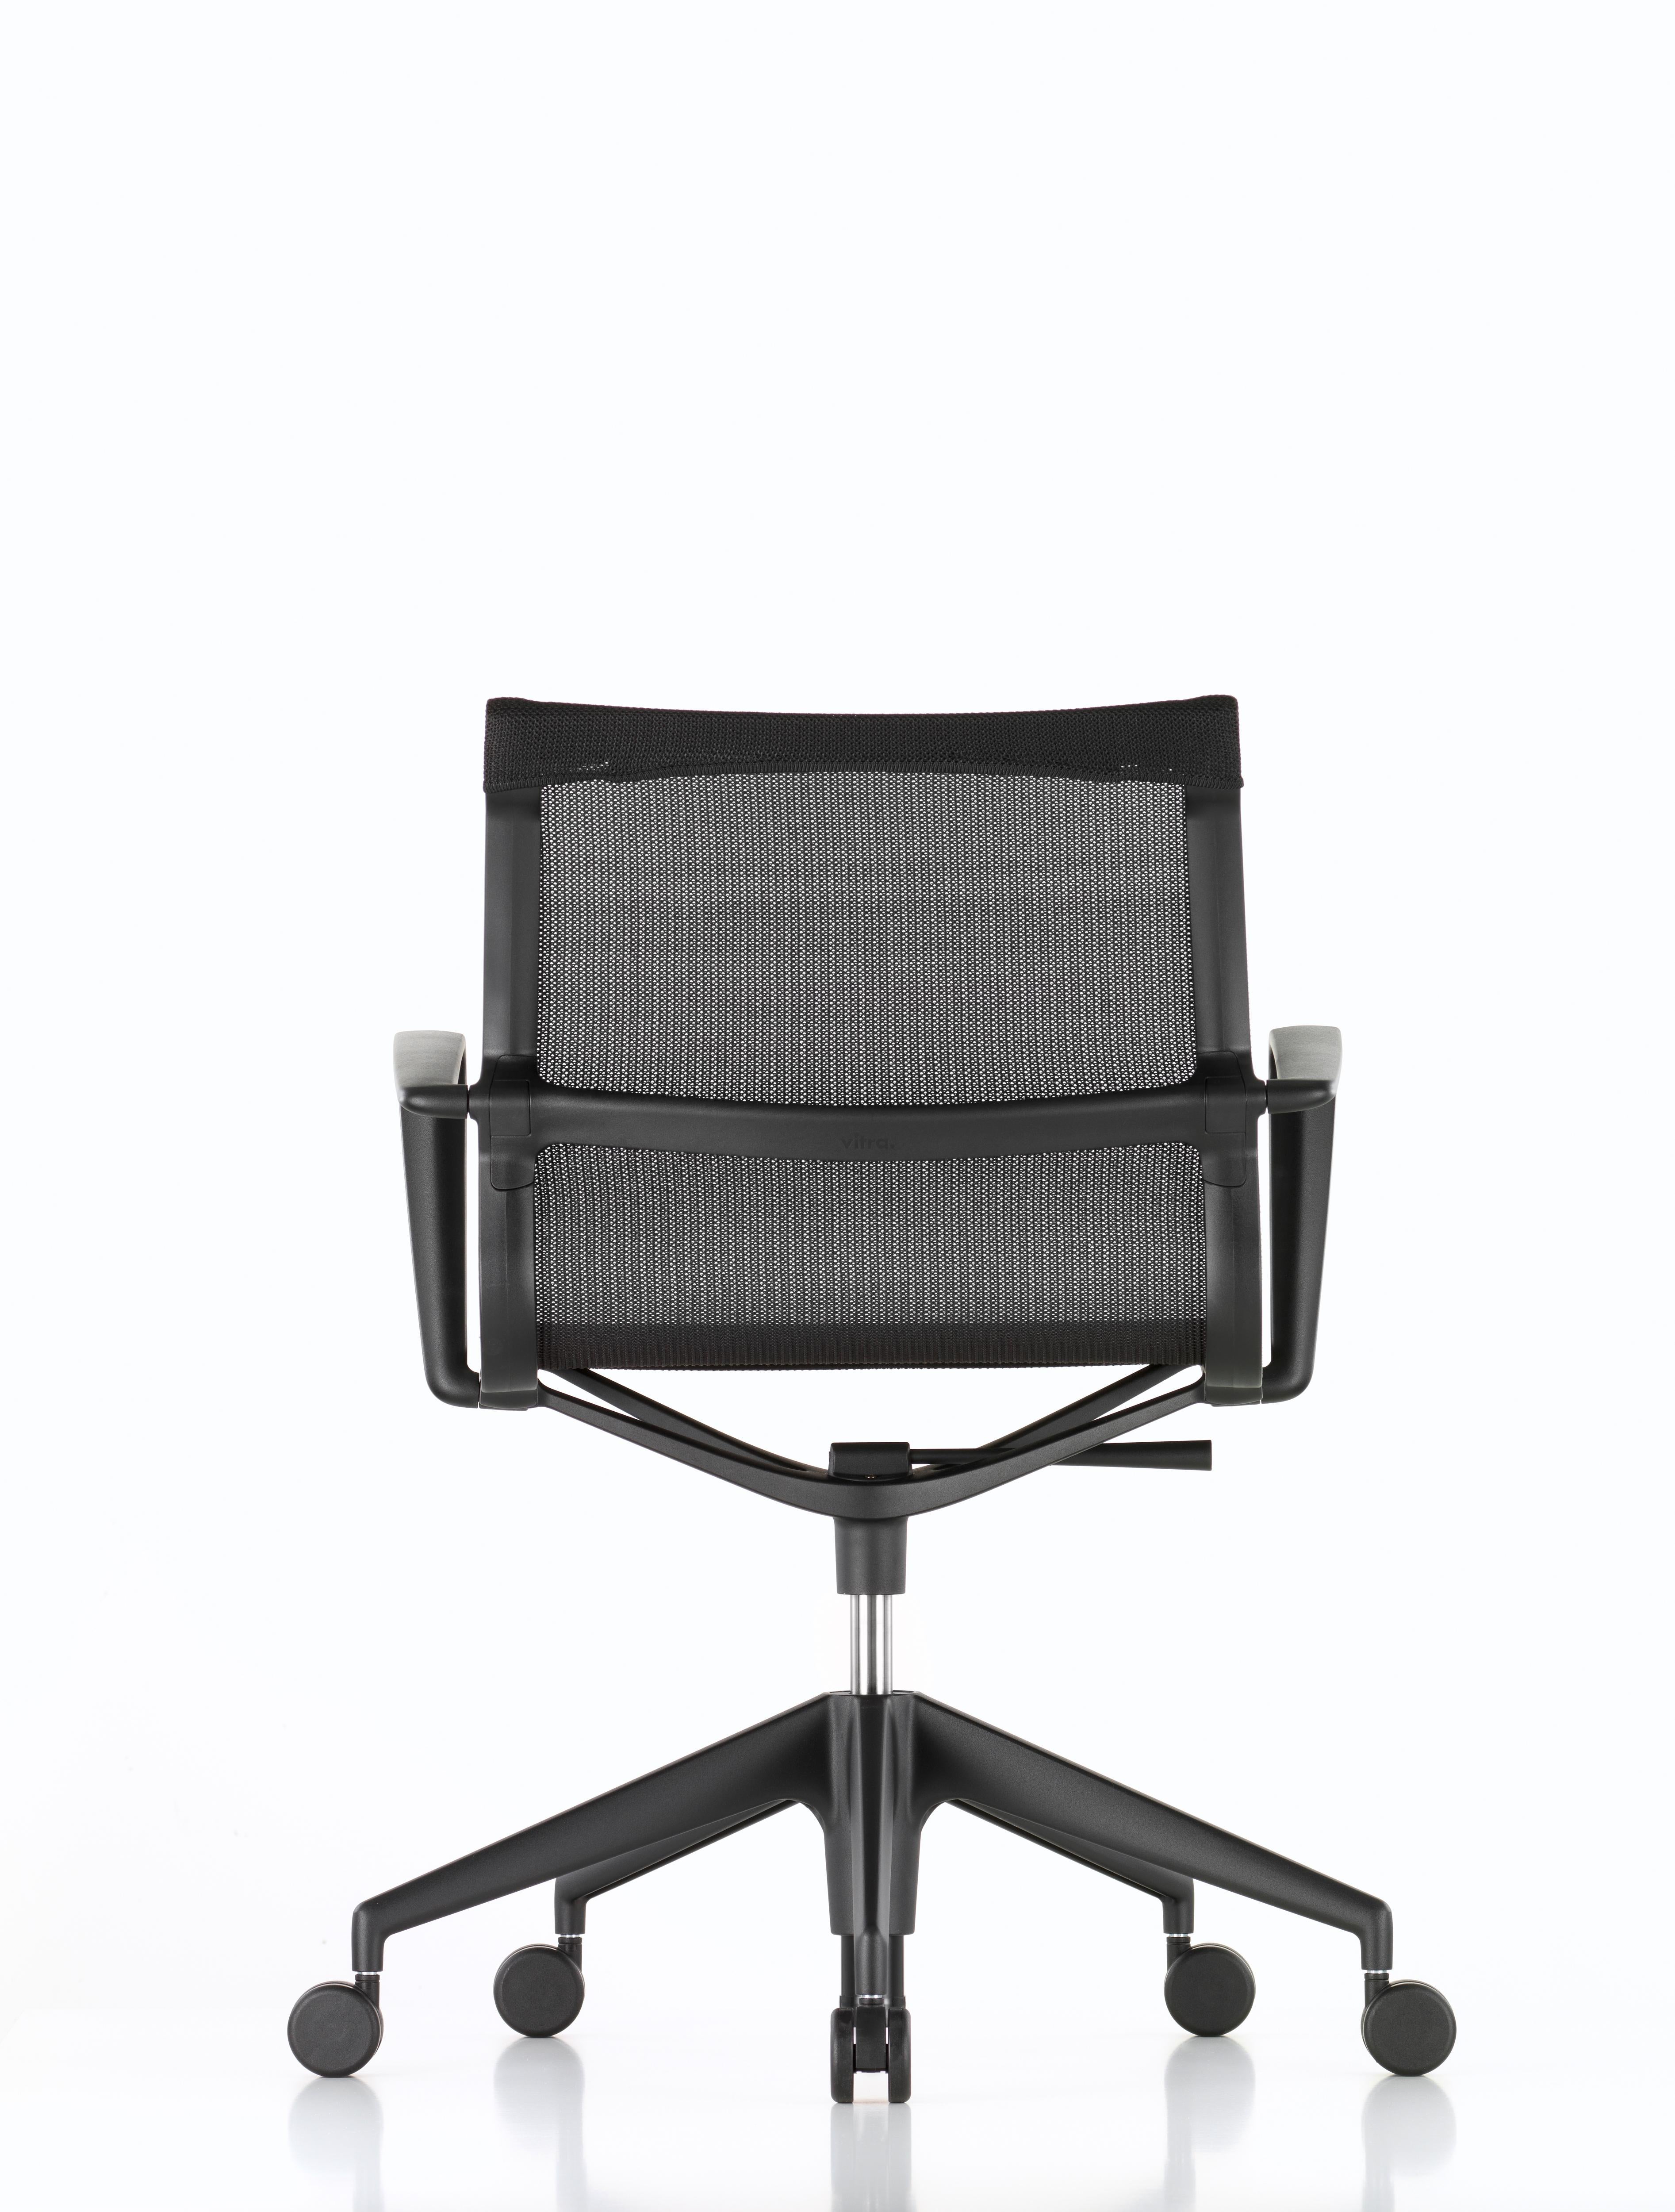 Vitra Physix Studio Chair in Black Pearl Trio Knit by Alberto Meda (Poliert) im Angebot